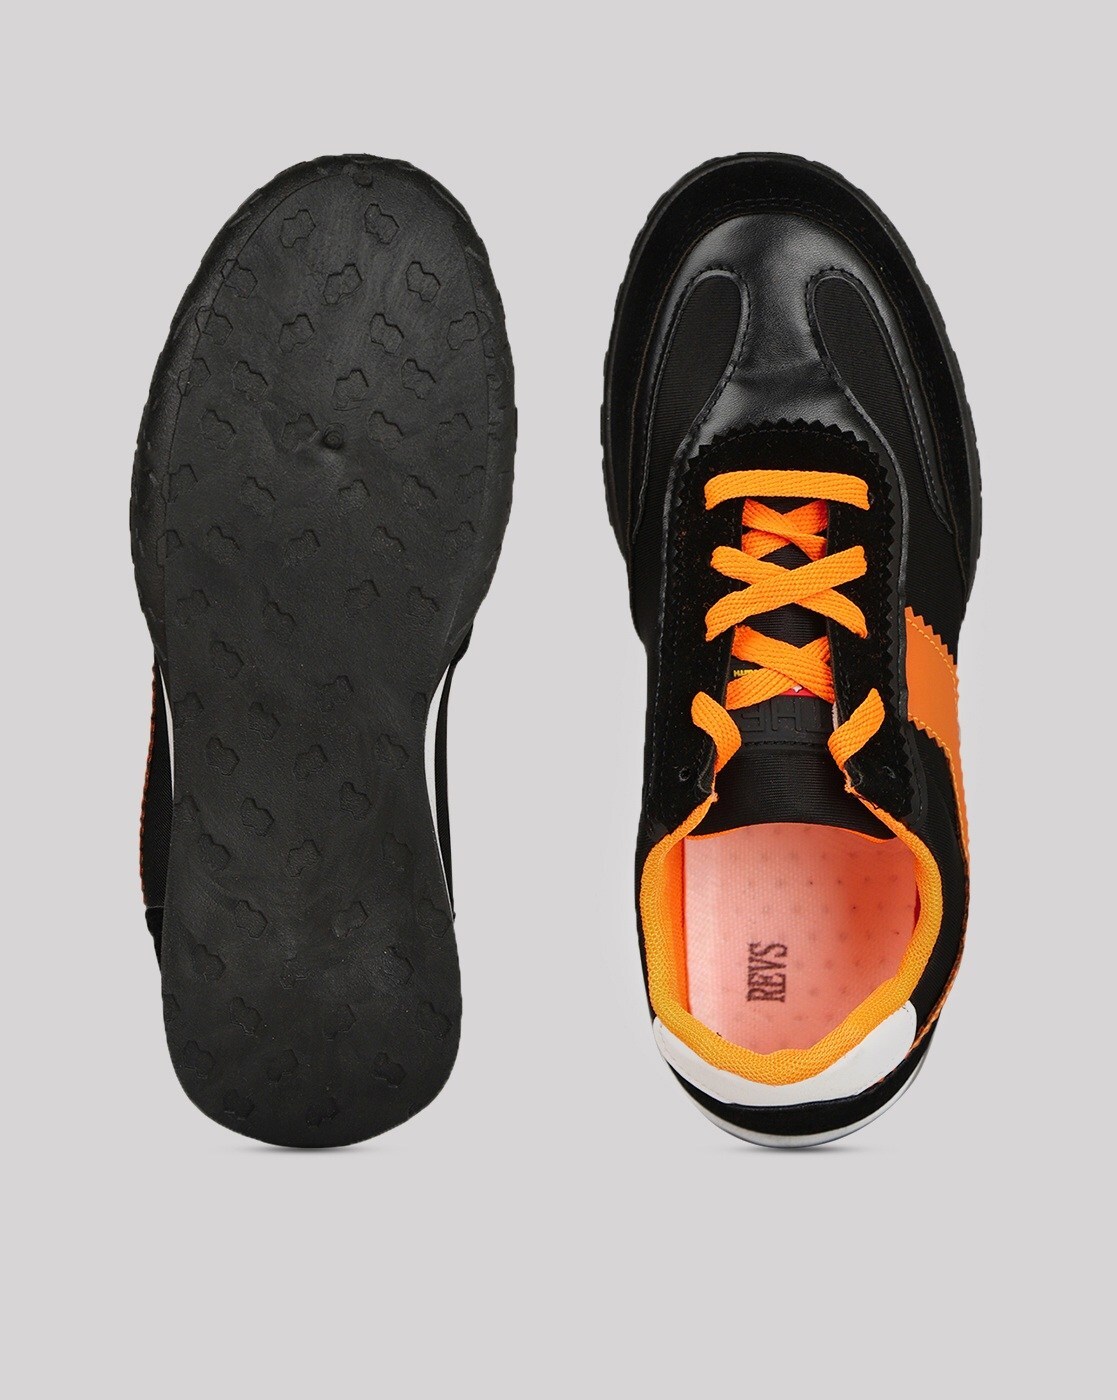 Trendy Synthetic Leather Orange Sports Sneakers For Men, gents sneaker, Men  Fashion Sneaker Shoes, Fashion Sneakers, पुरुषों के लिए स्नीकर जूते, मेन  स्नीकर शूज - Chutaki Online Store, Thane | ID: 26002553897